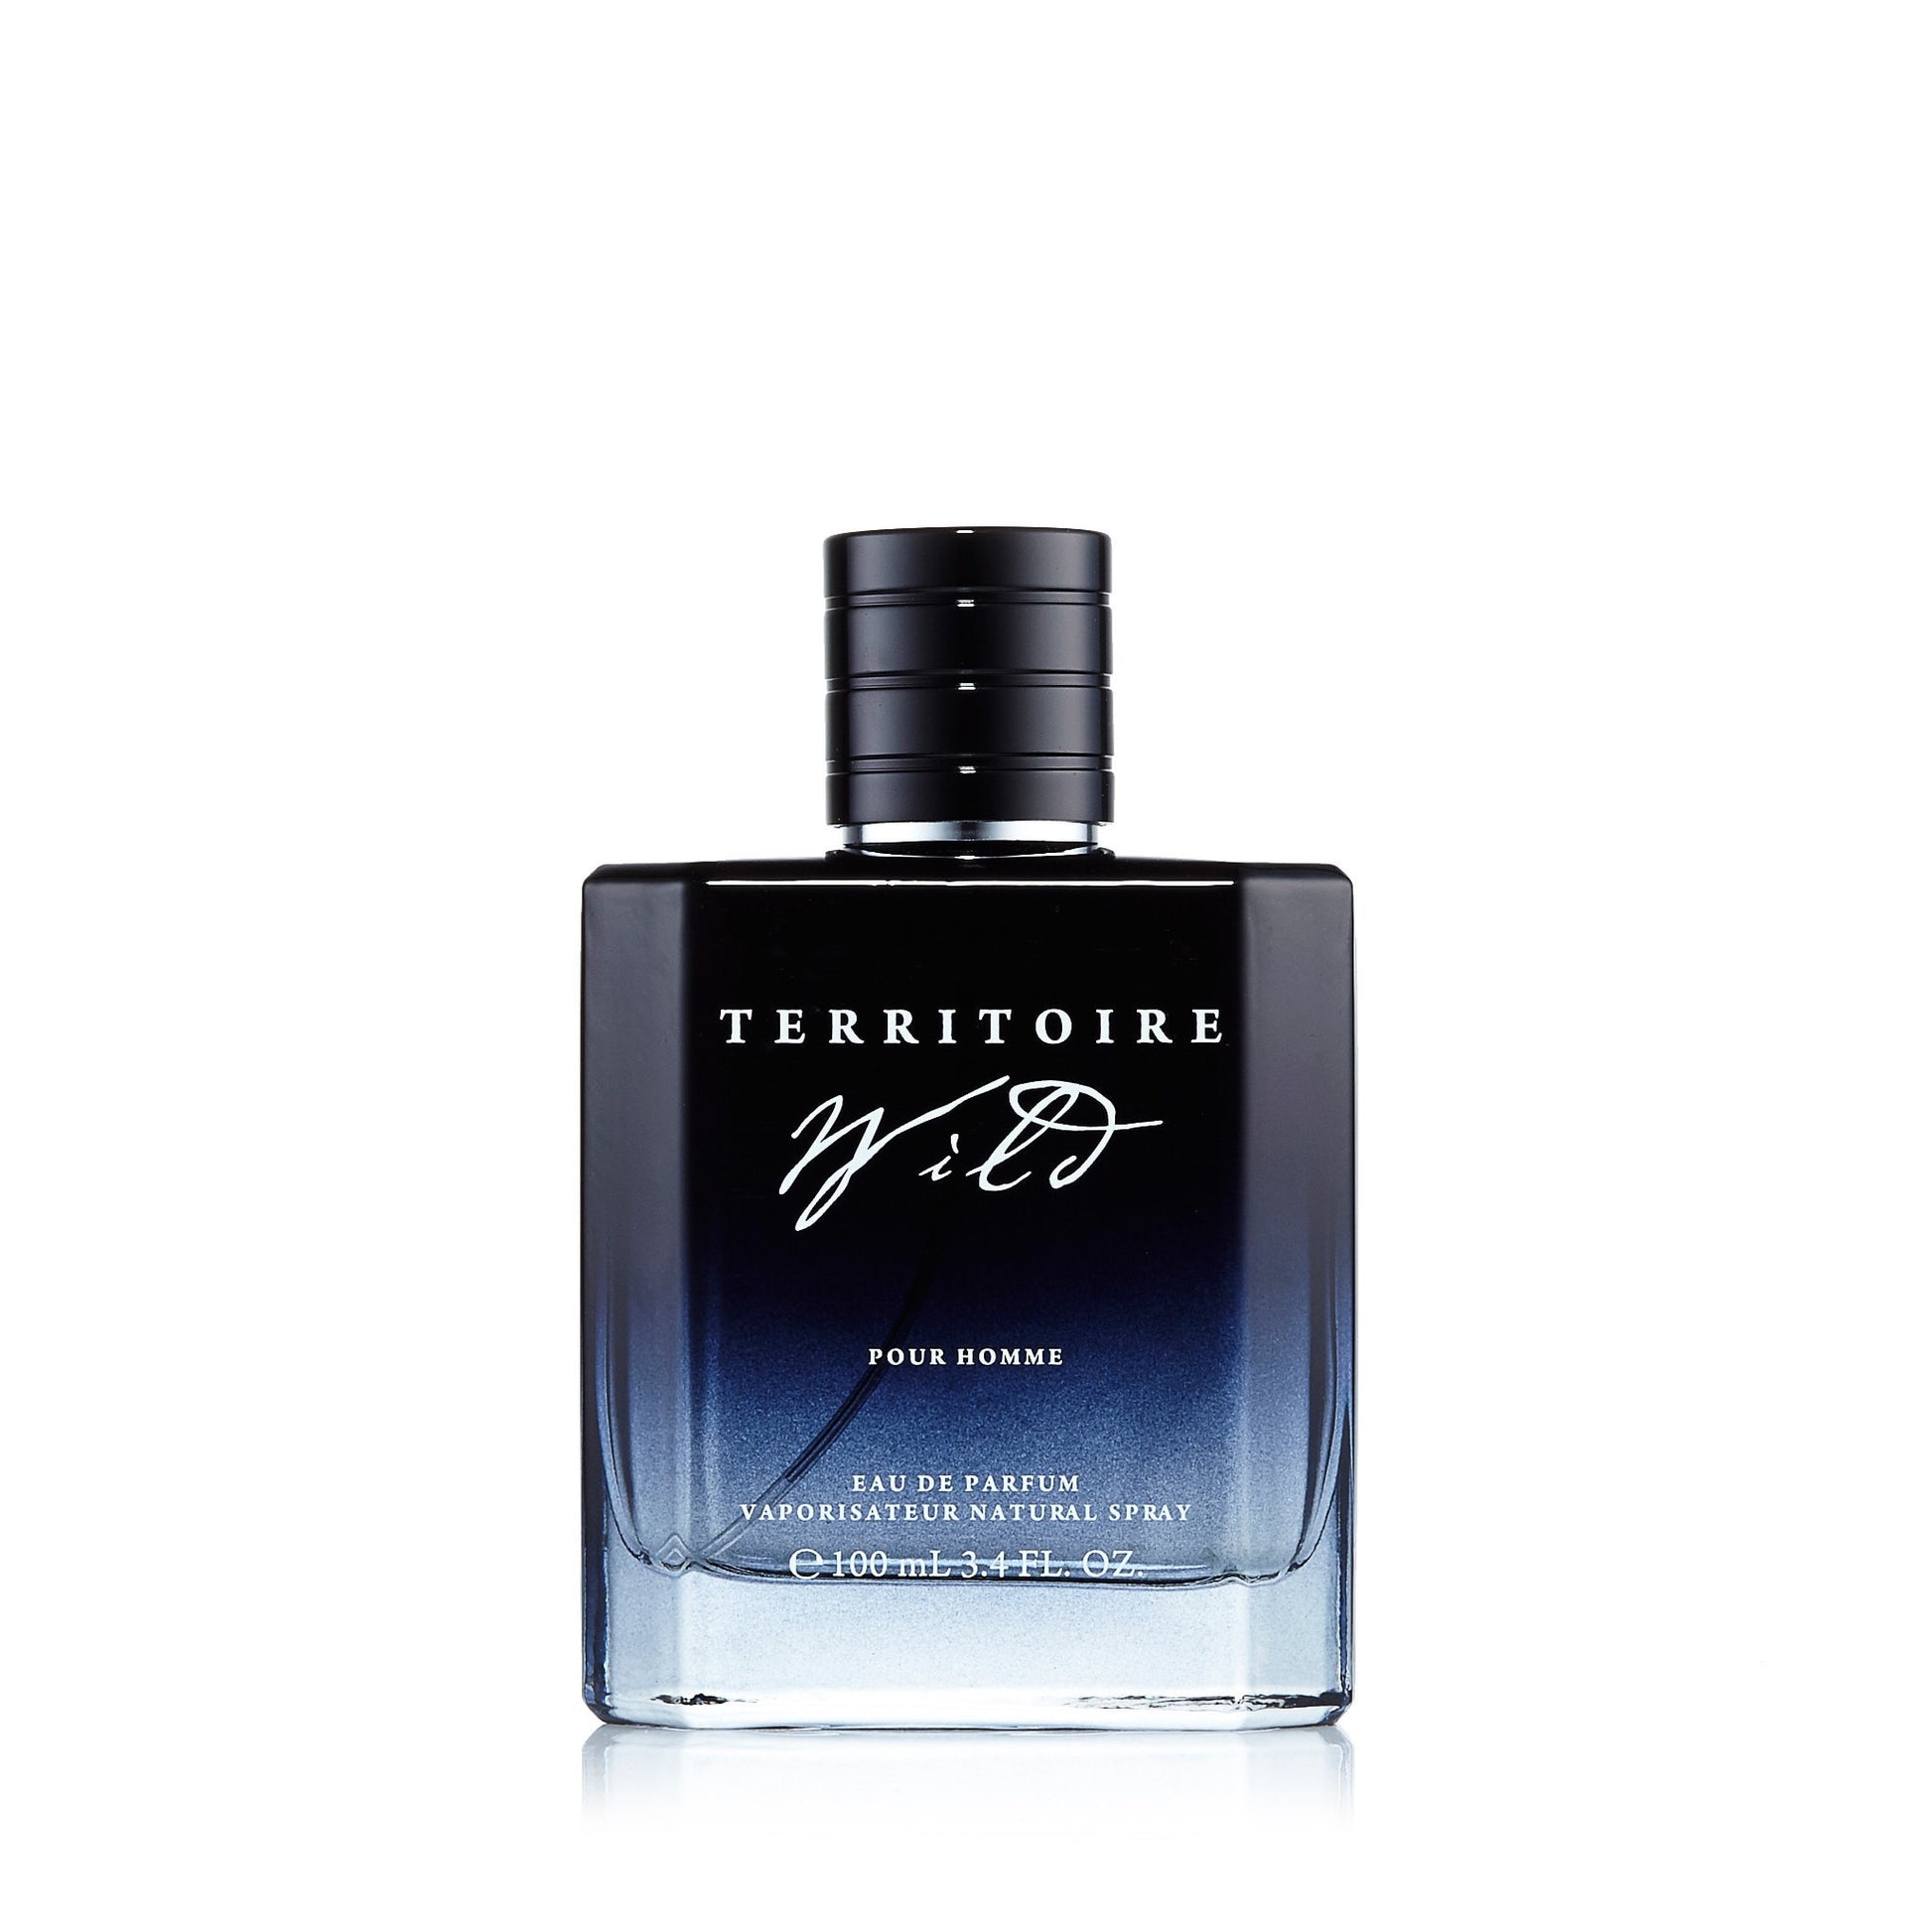 Territoire Wild Eau de Parfum Spray for Men, Product image 1